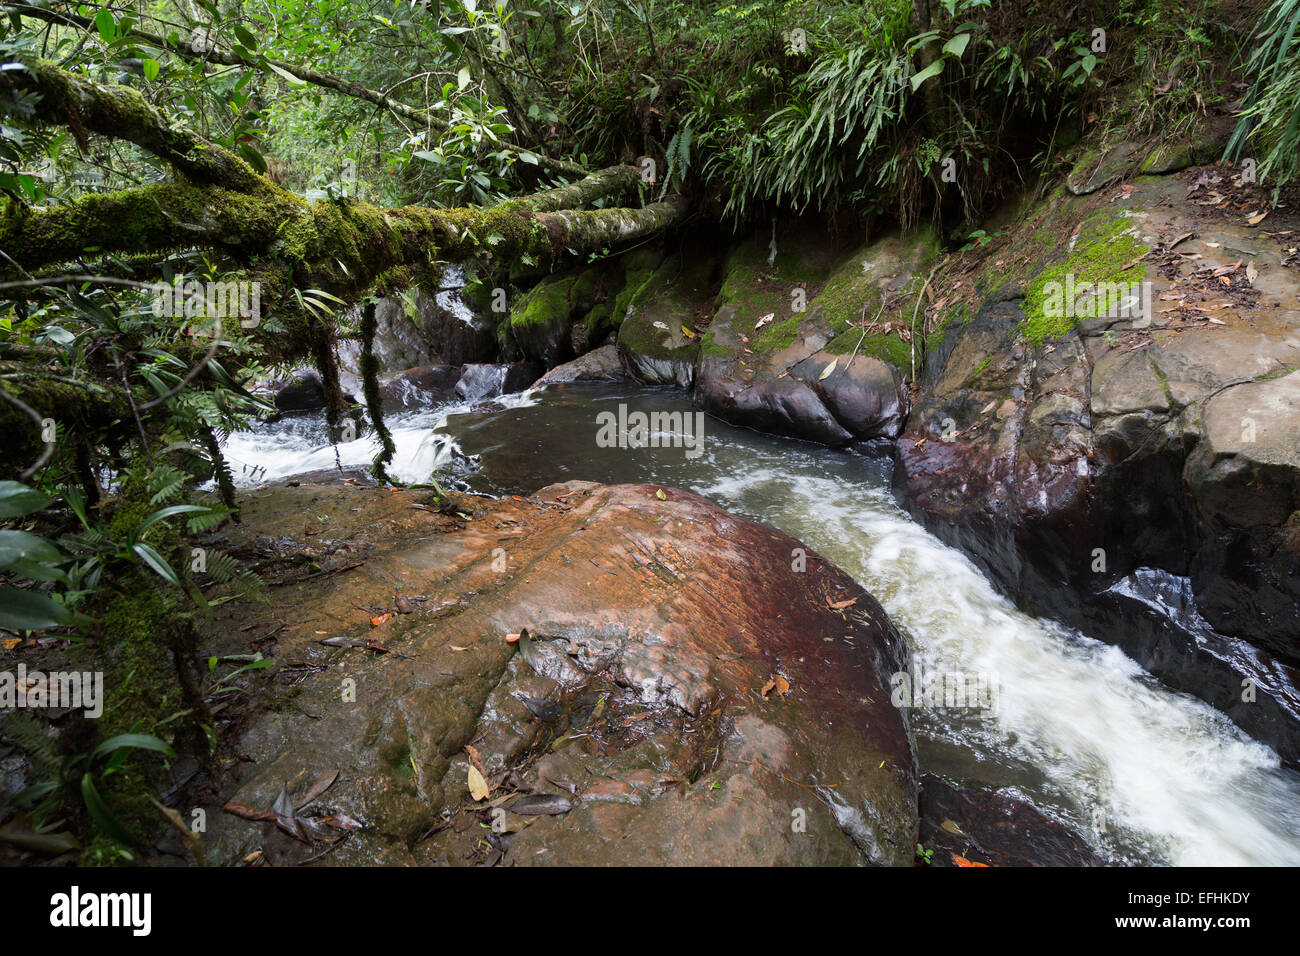 Stream flowing over boulders, leading through forest near tourist spot 'Ducha de Prata' (Silver Fall), Campos do Jordao, state of Sao Paulo, Brazil Stock Photo